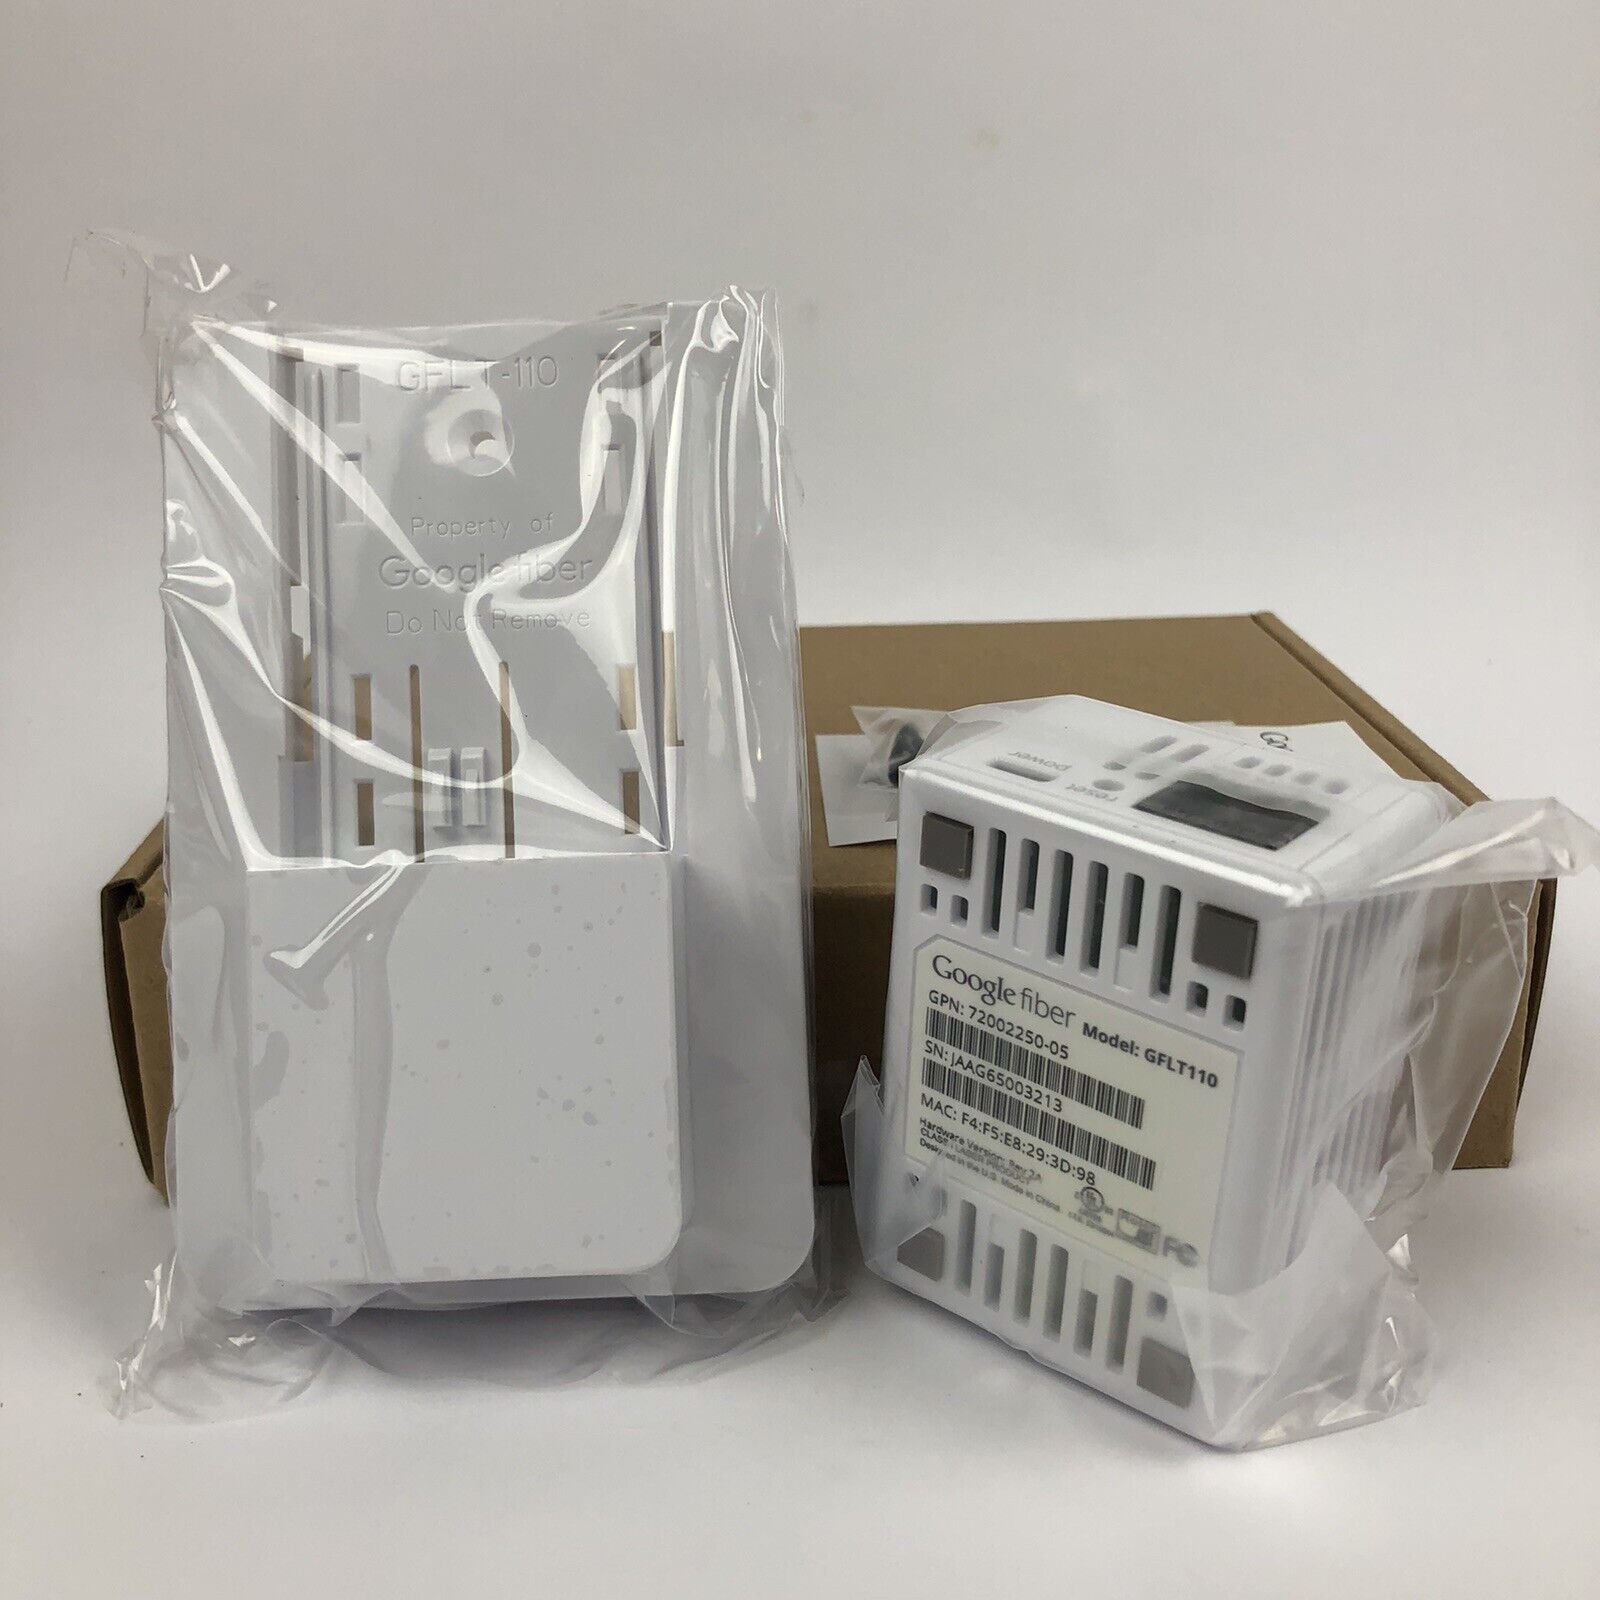 2 Google Fiber Jacks & Base GFLT110 NEW IN BOX SEALED From Manufacturer Google Fiber 86003010-07 - фотография #6